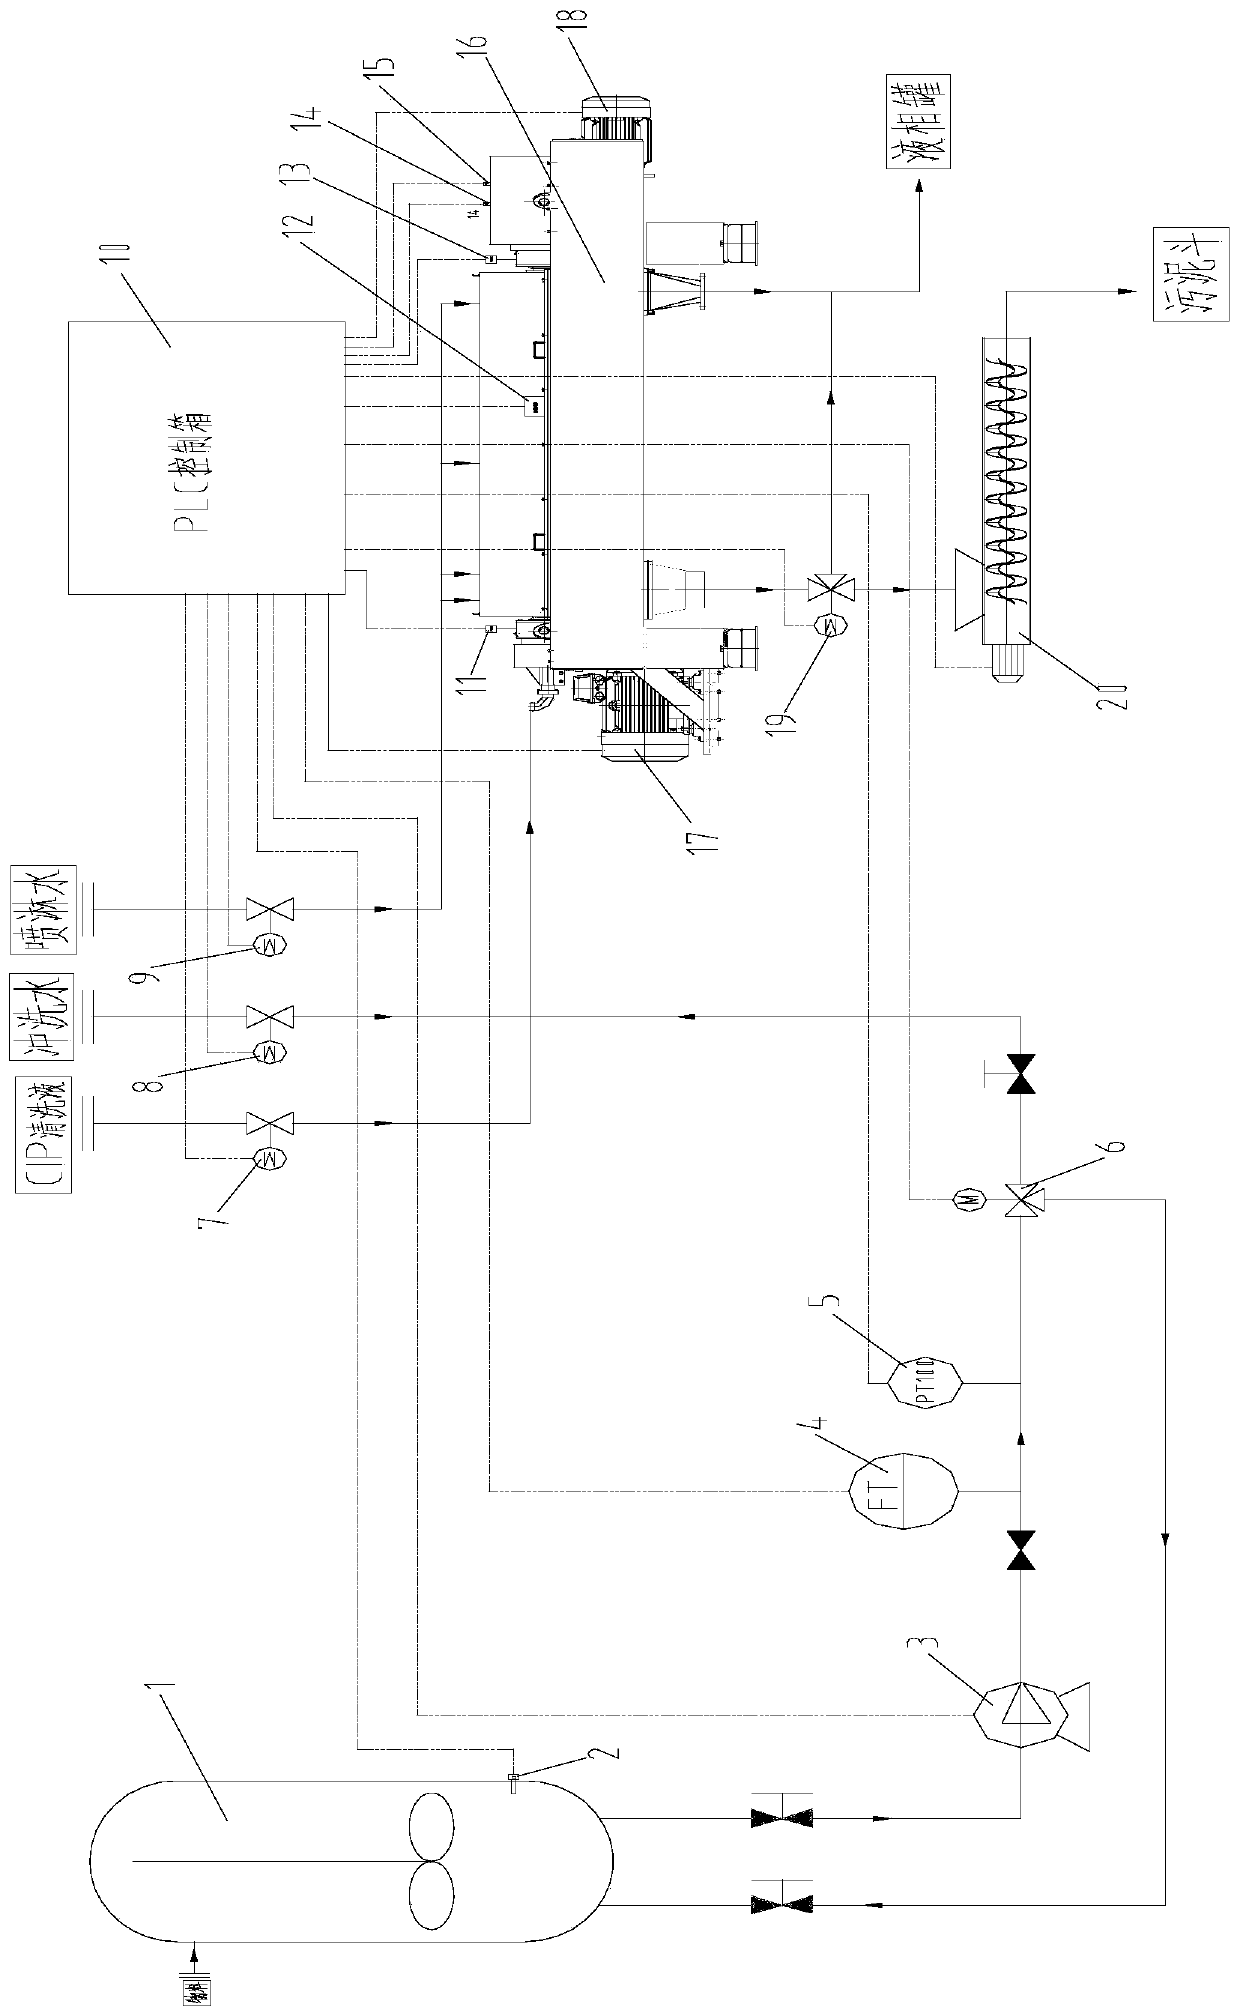 Intelligent horizontal screw machine operation control system and method